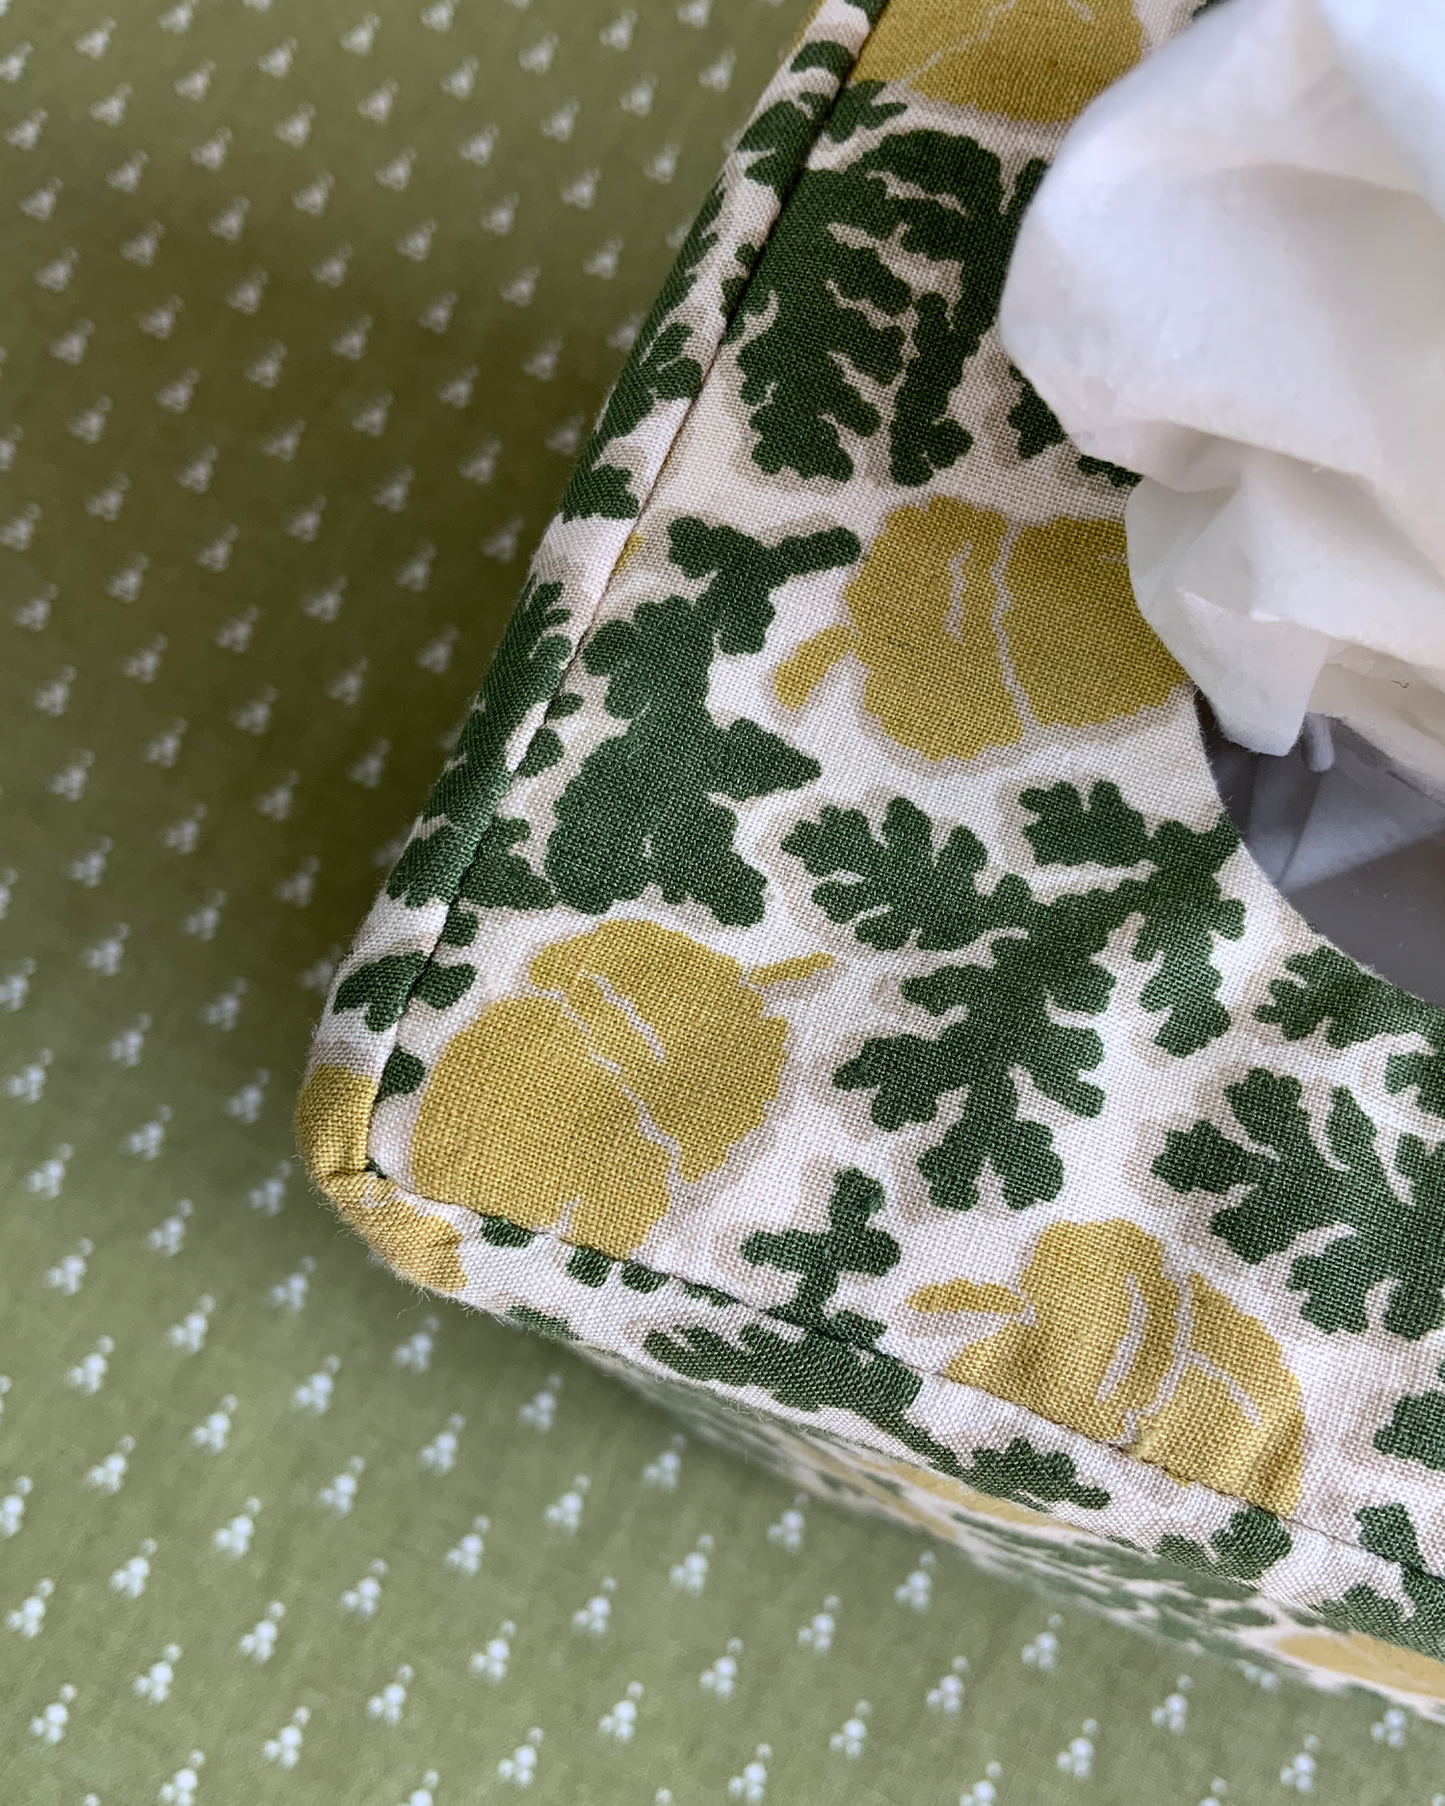 Tissue Box Cover “Acorn” in green/mustard